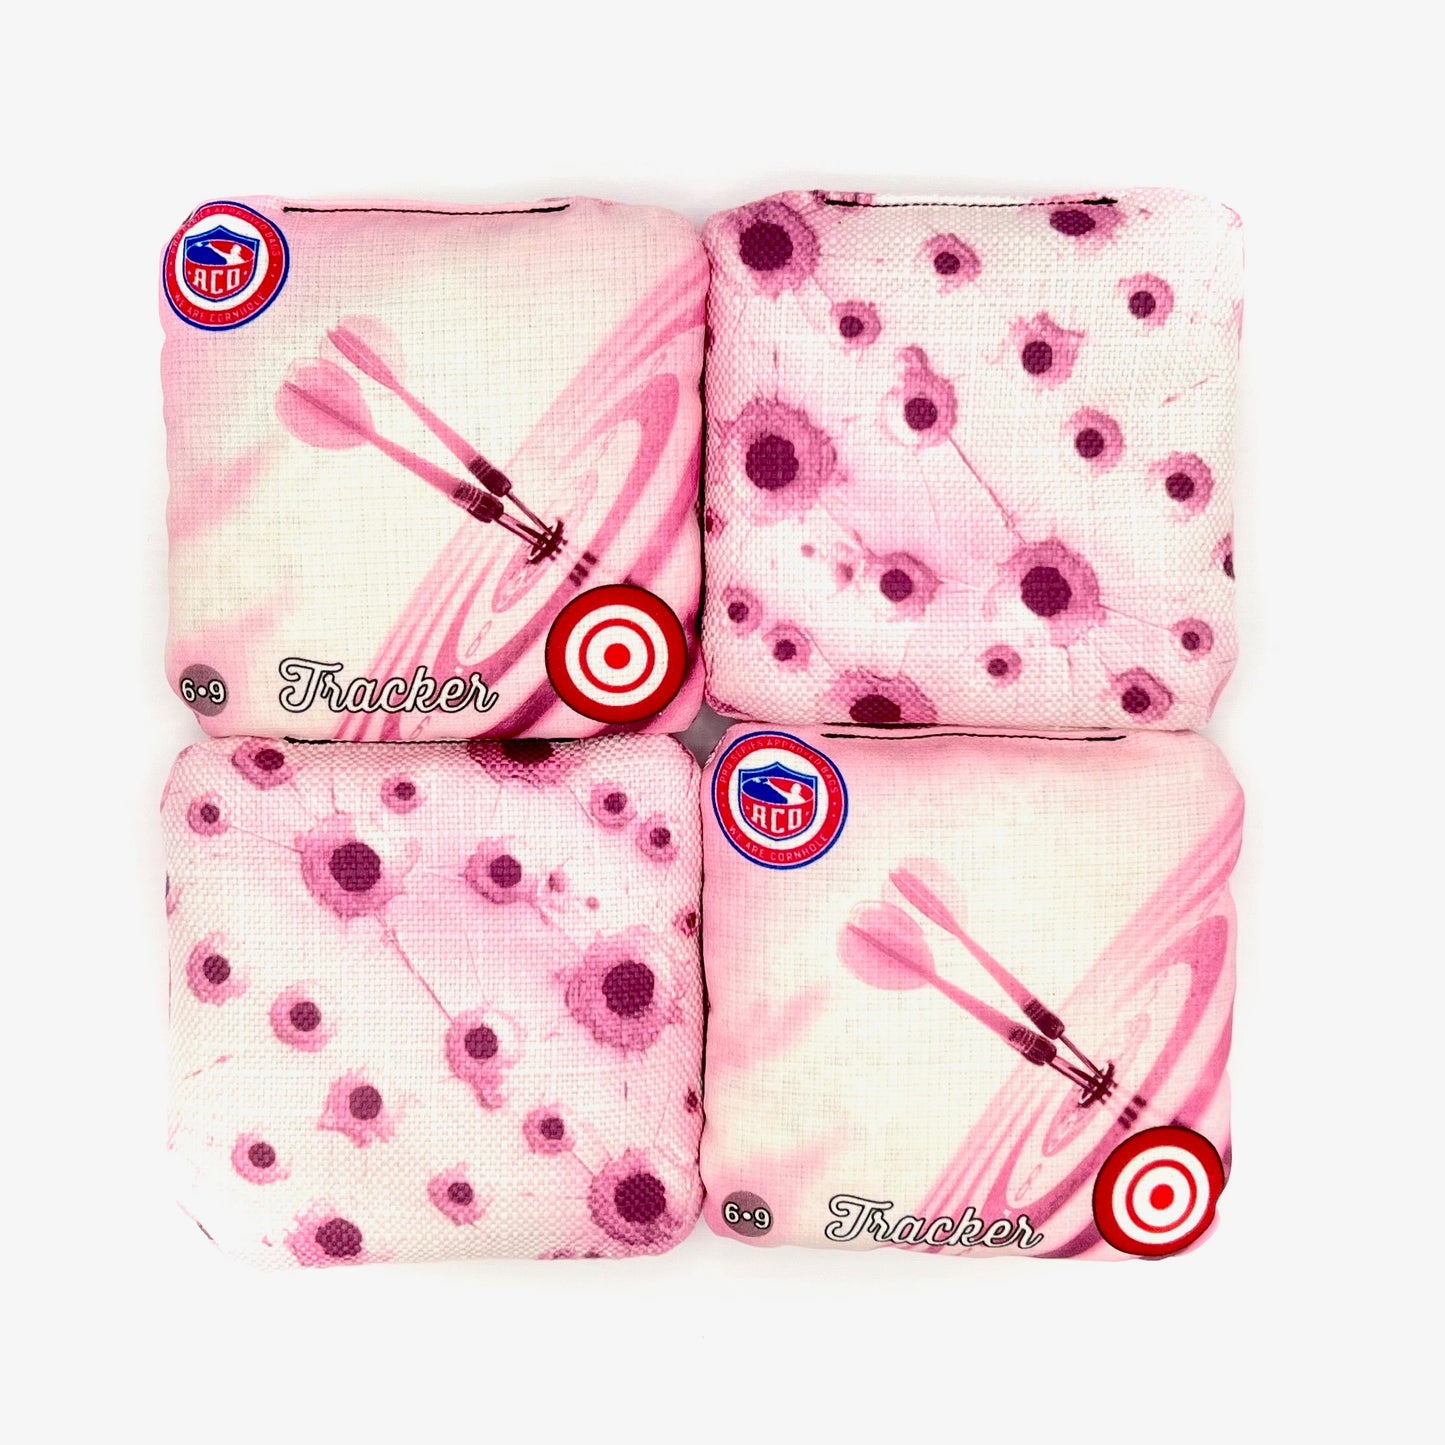 Pink Bullseye Tracker Cornhole Bag, Top Shot